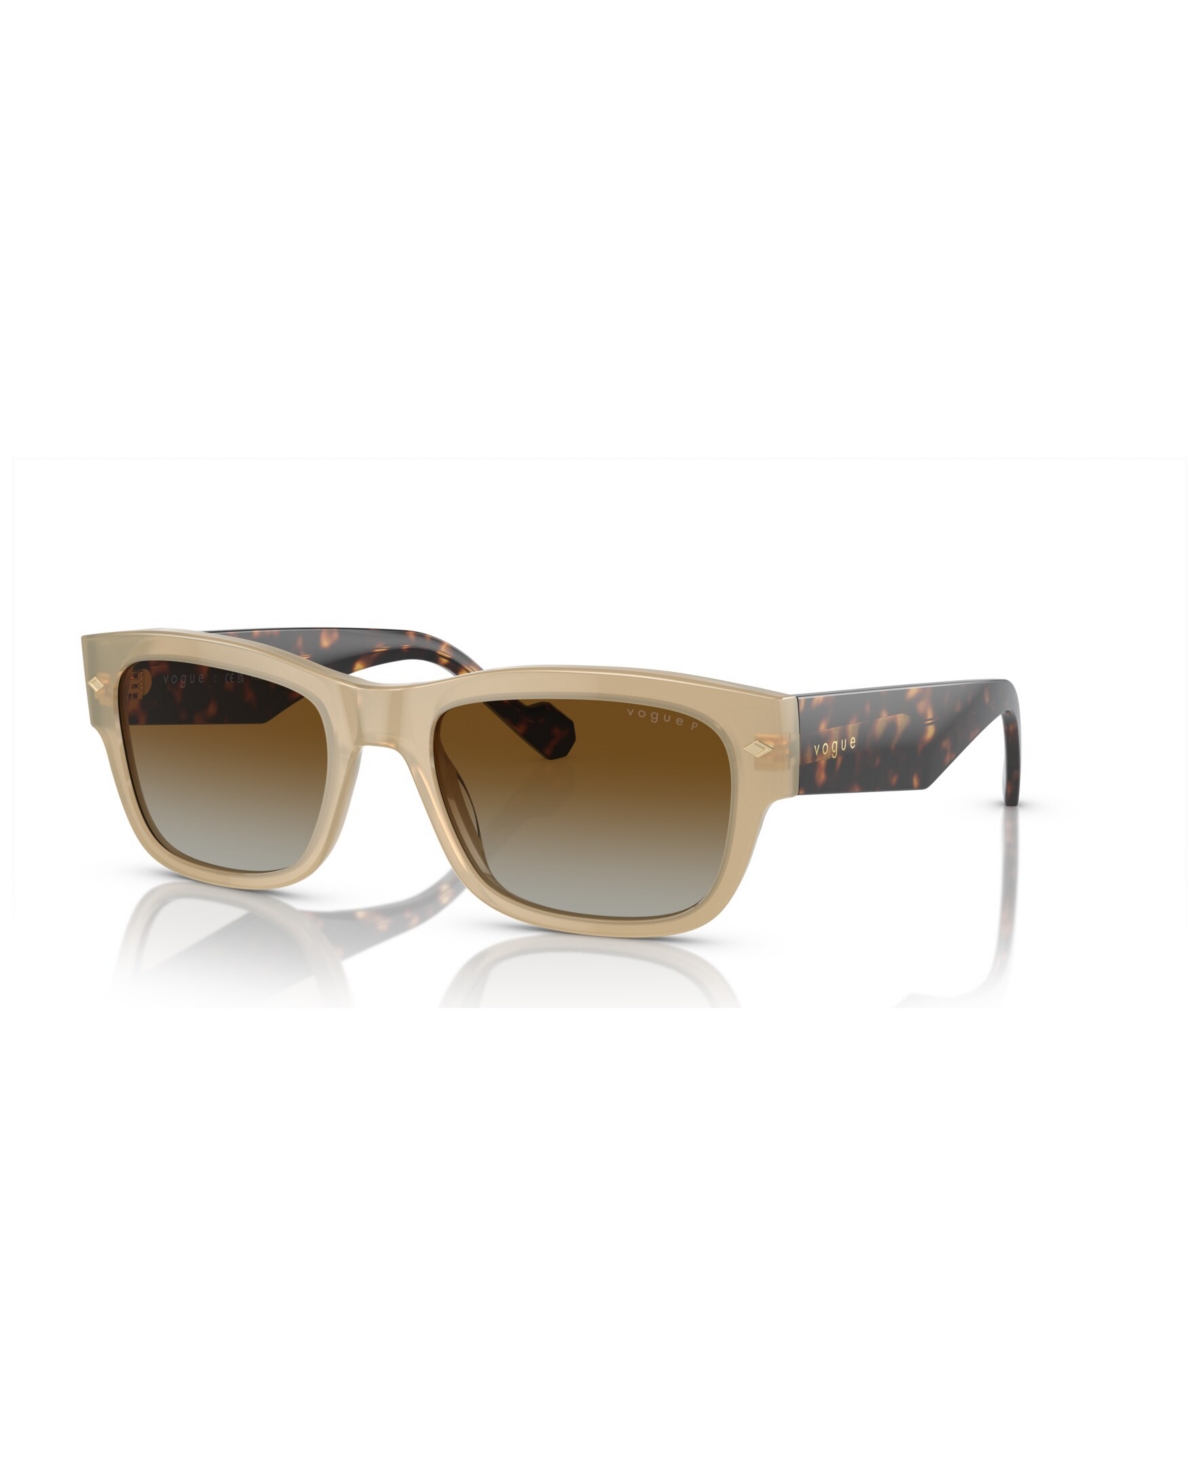 Men's Polarized Sunglasses, Gradient Polar VO5530S - Opal Beige